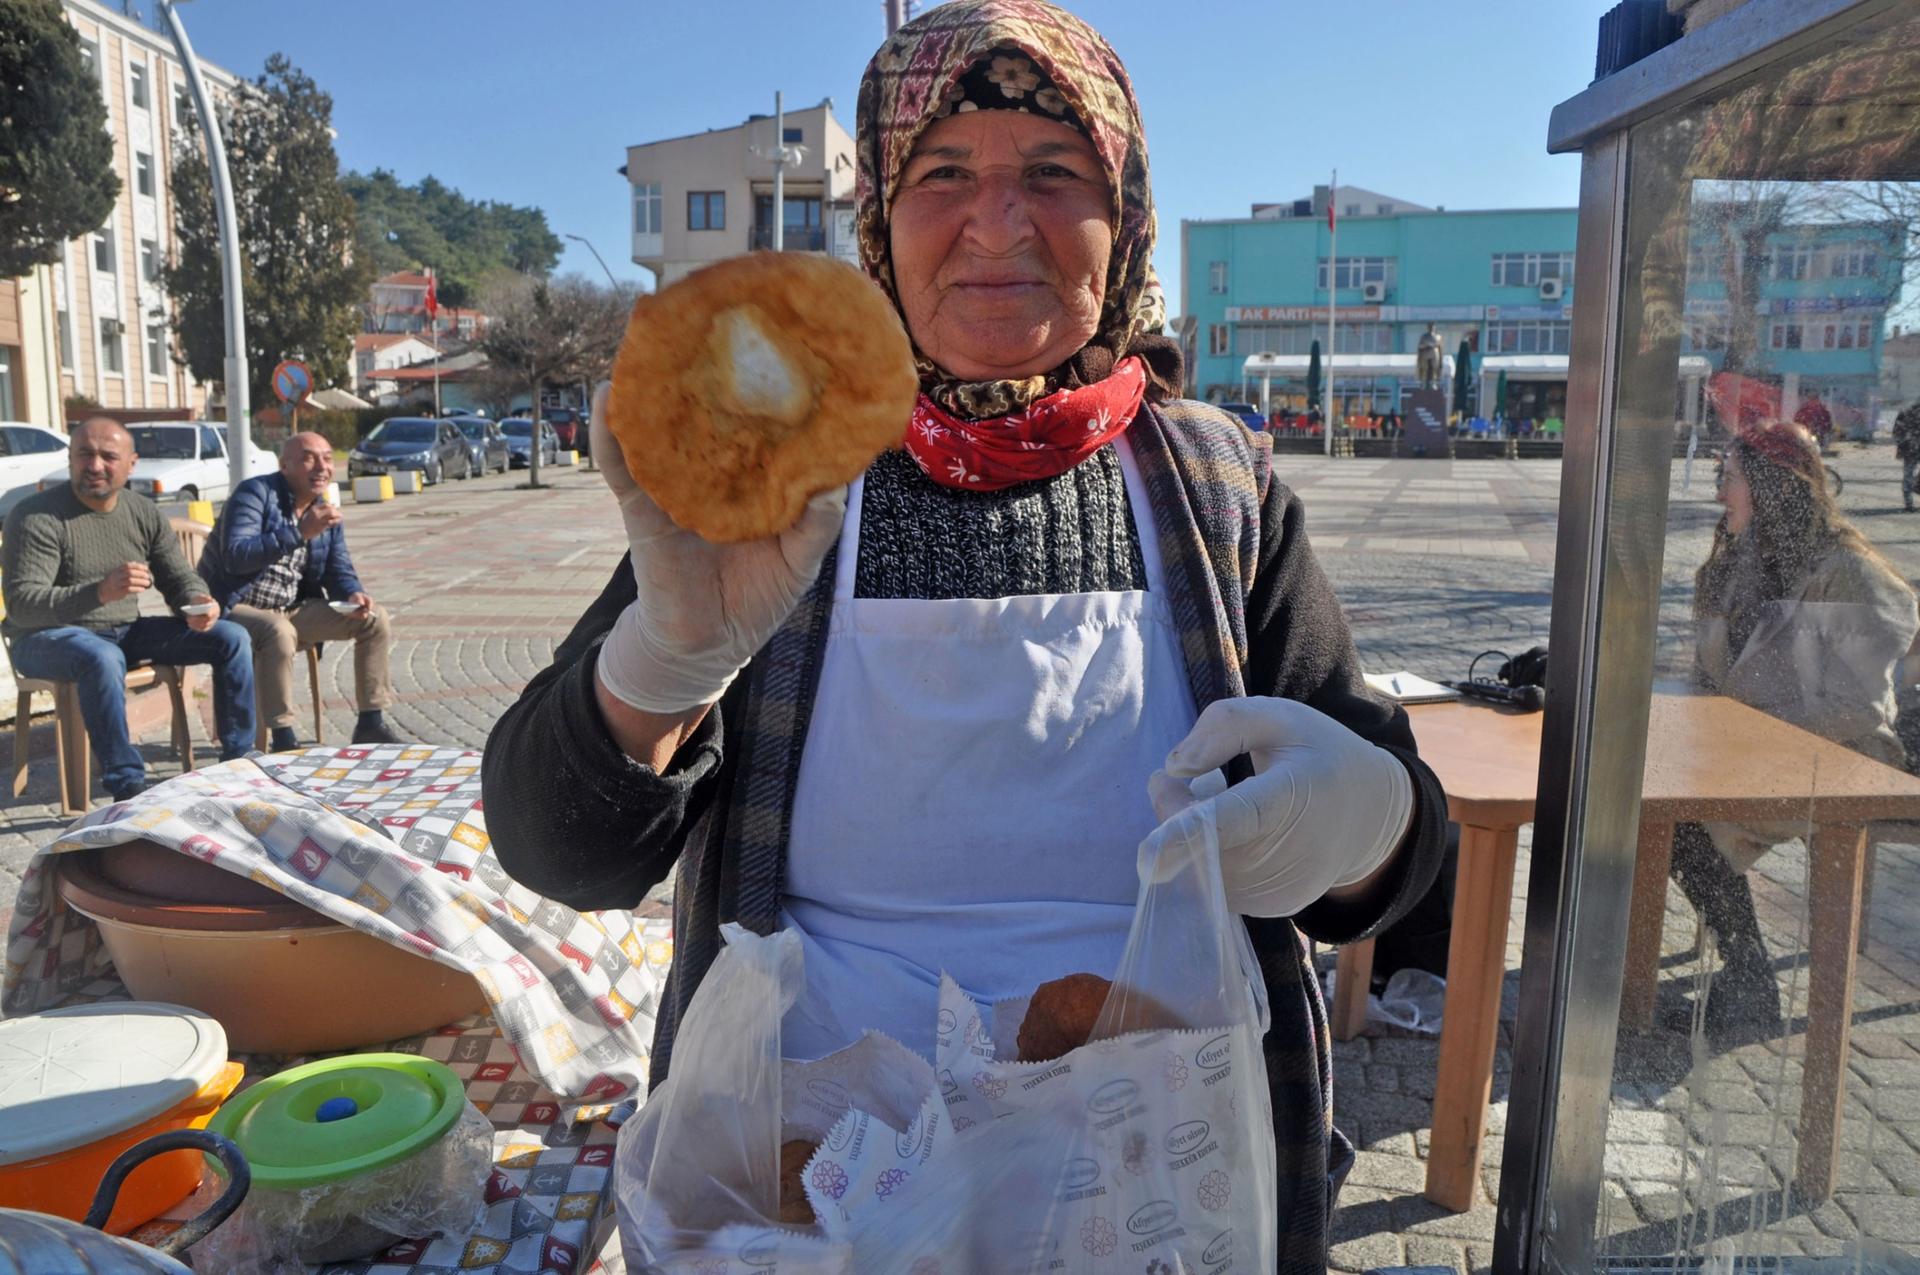 Sevinç Anne, or Mother Sevinç, sells homemade rounds of fried dough in Ipsala’s main square. 